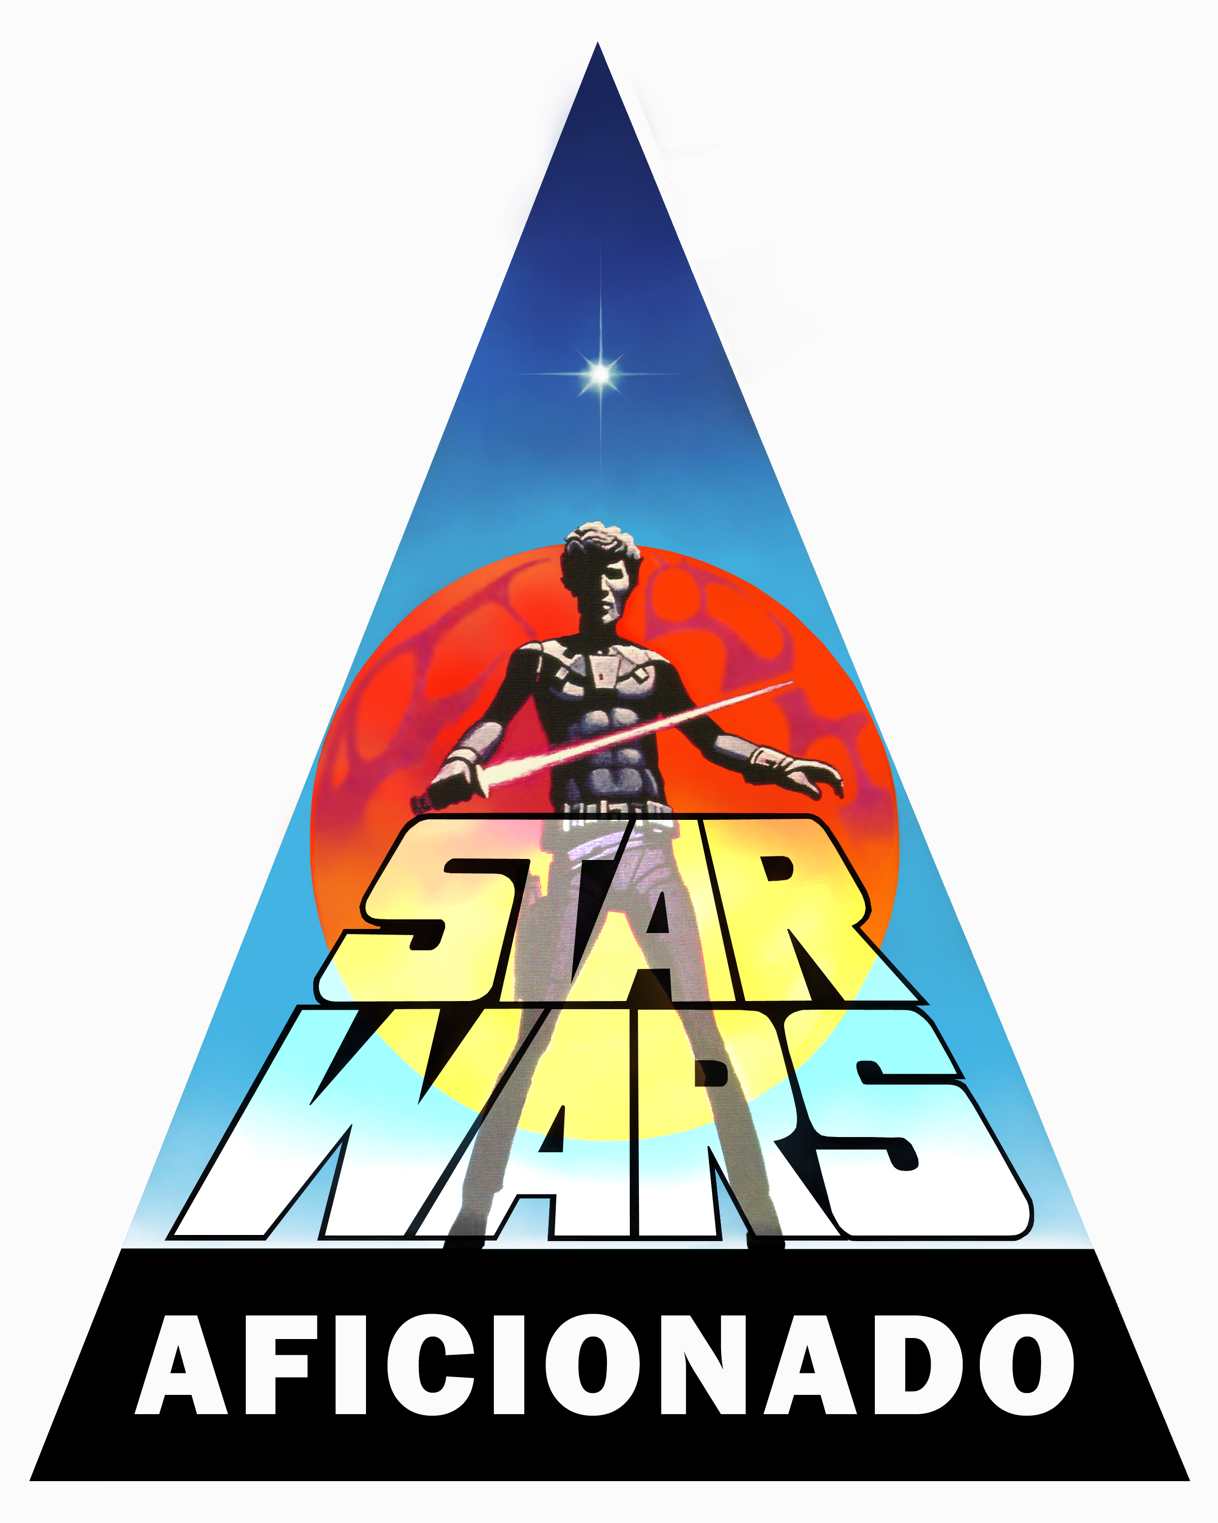 WELCOME TO THE WIDER UNIVERSE OF 'STAR WARS AFICIONADO'